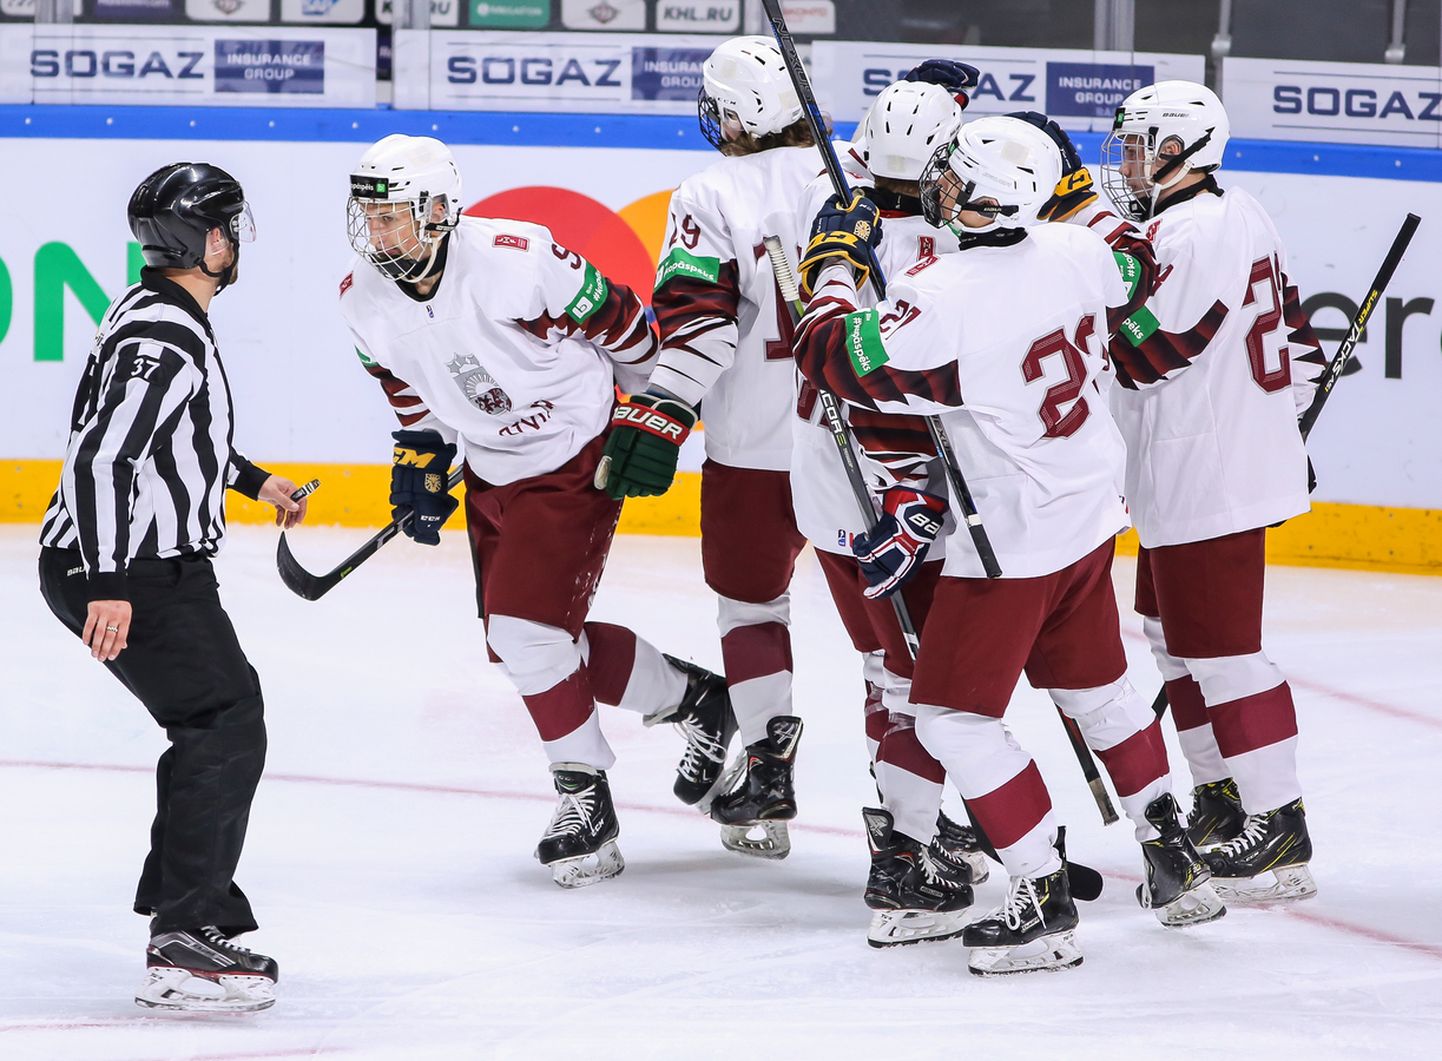 Latvijas U-18 izlases hokejisti